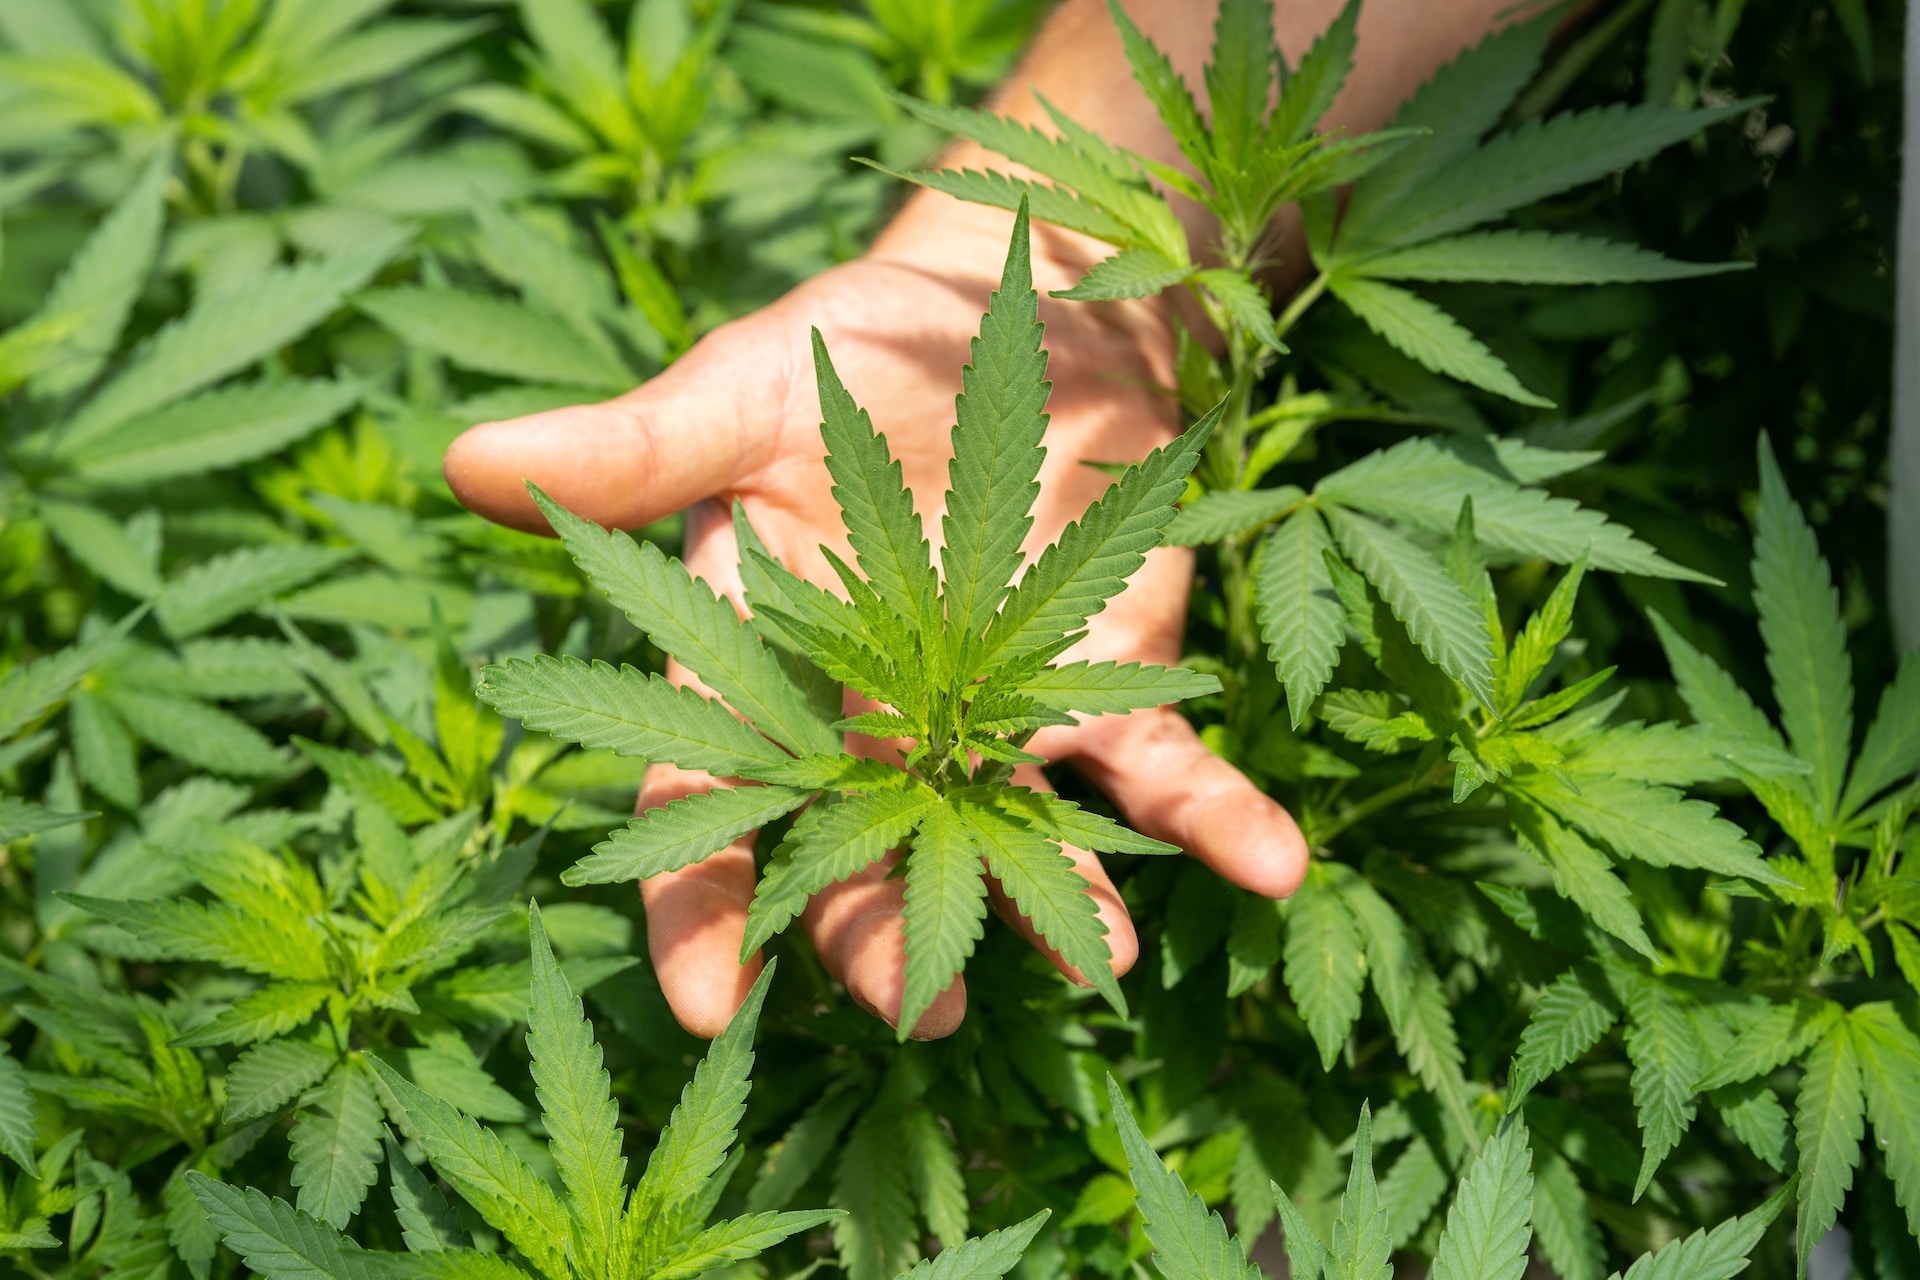 Microdosing Cannabis